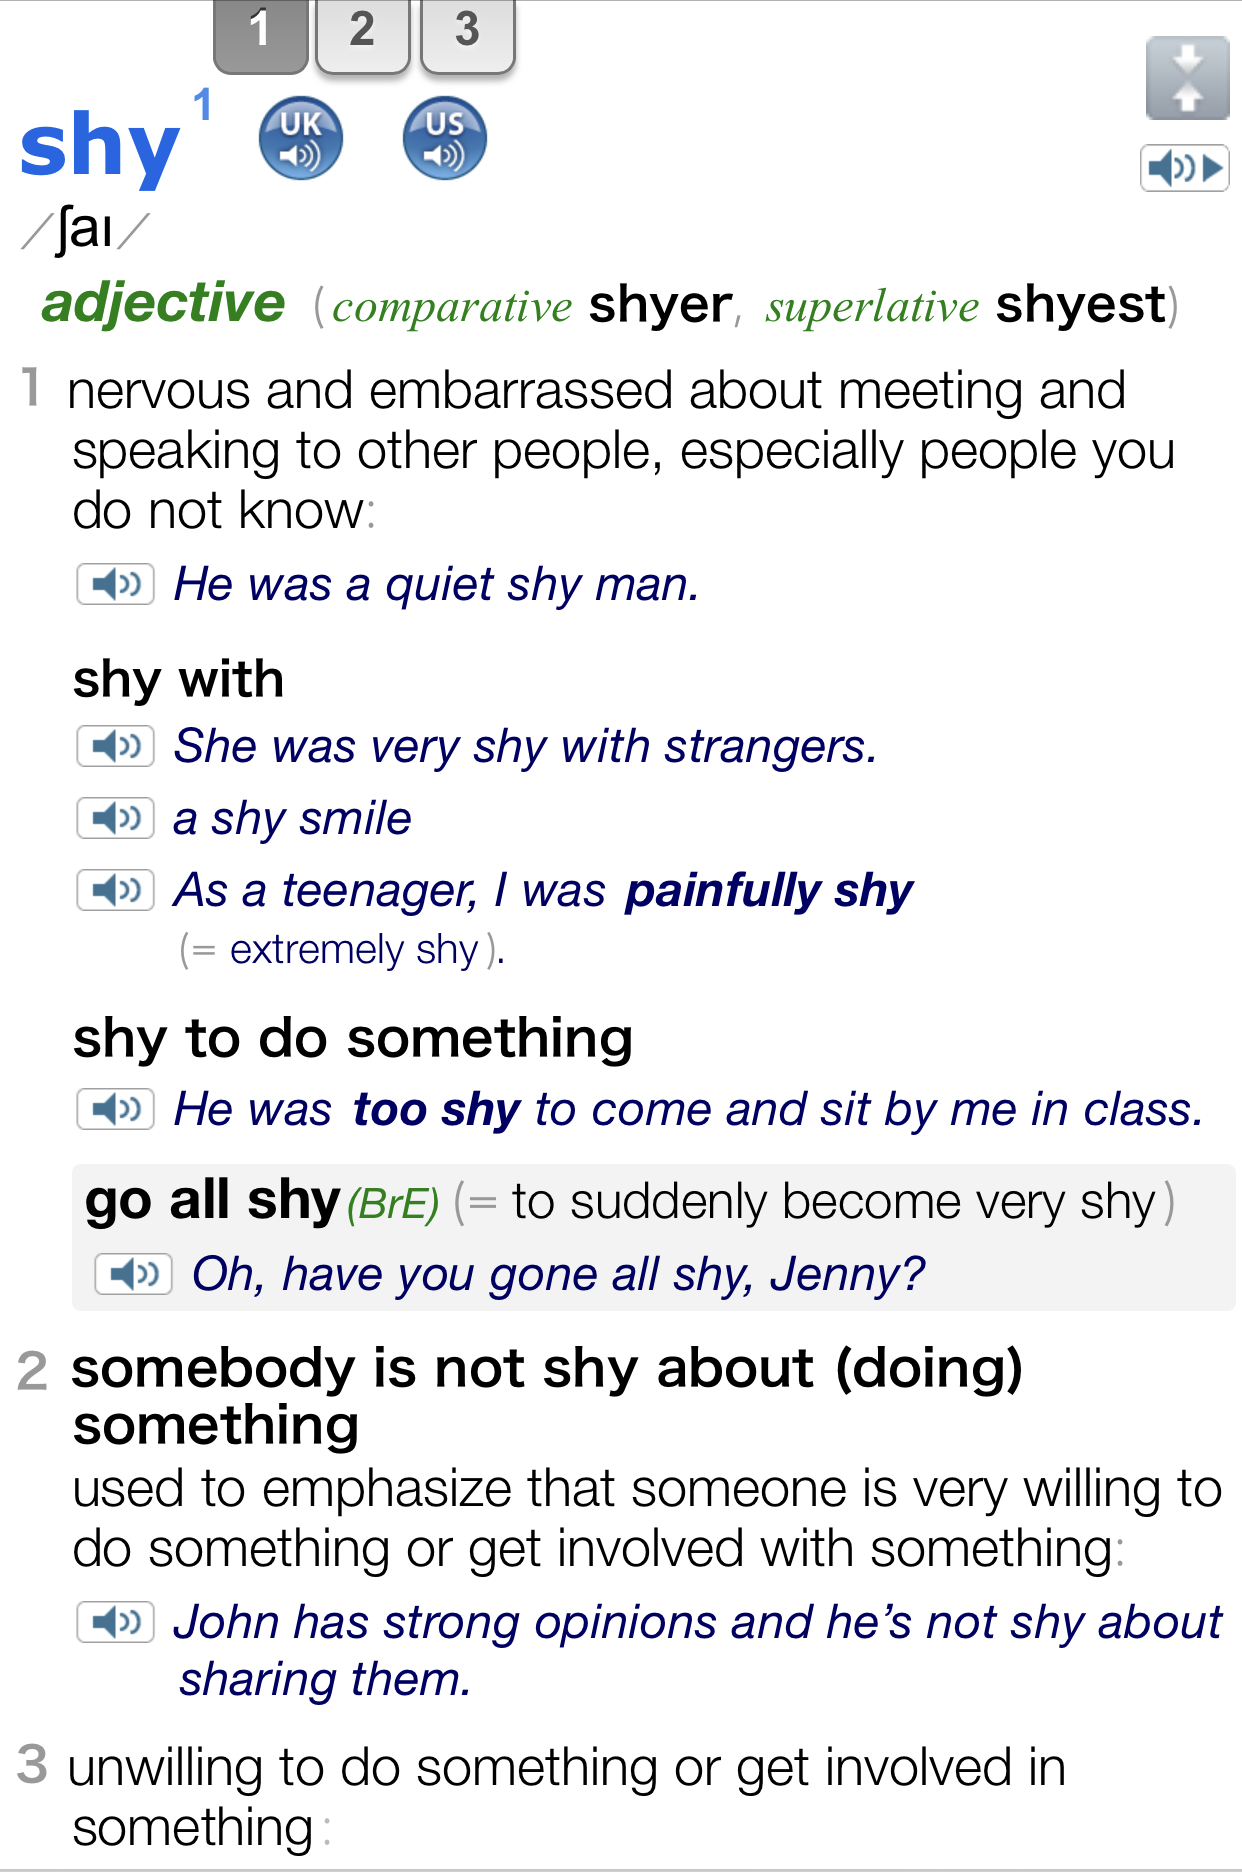 longman dictionary shy